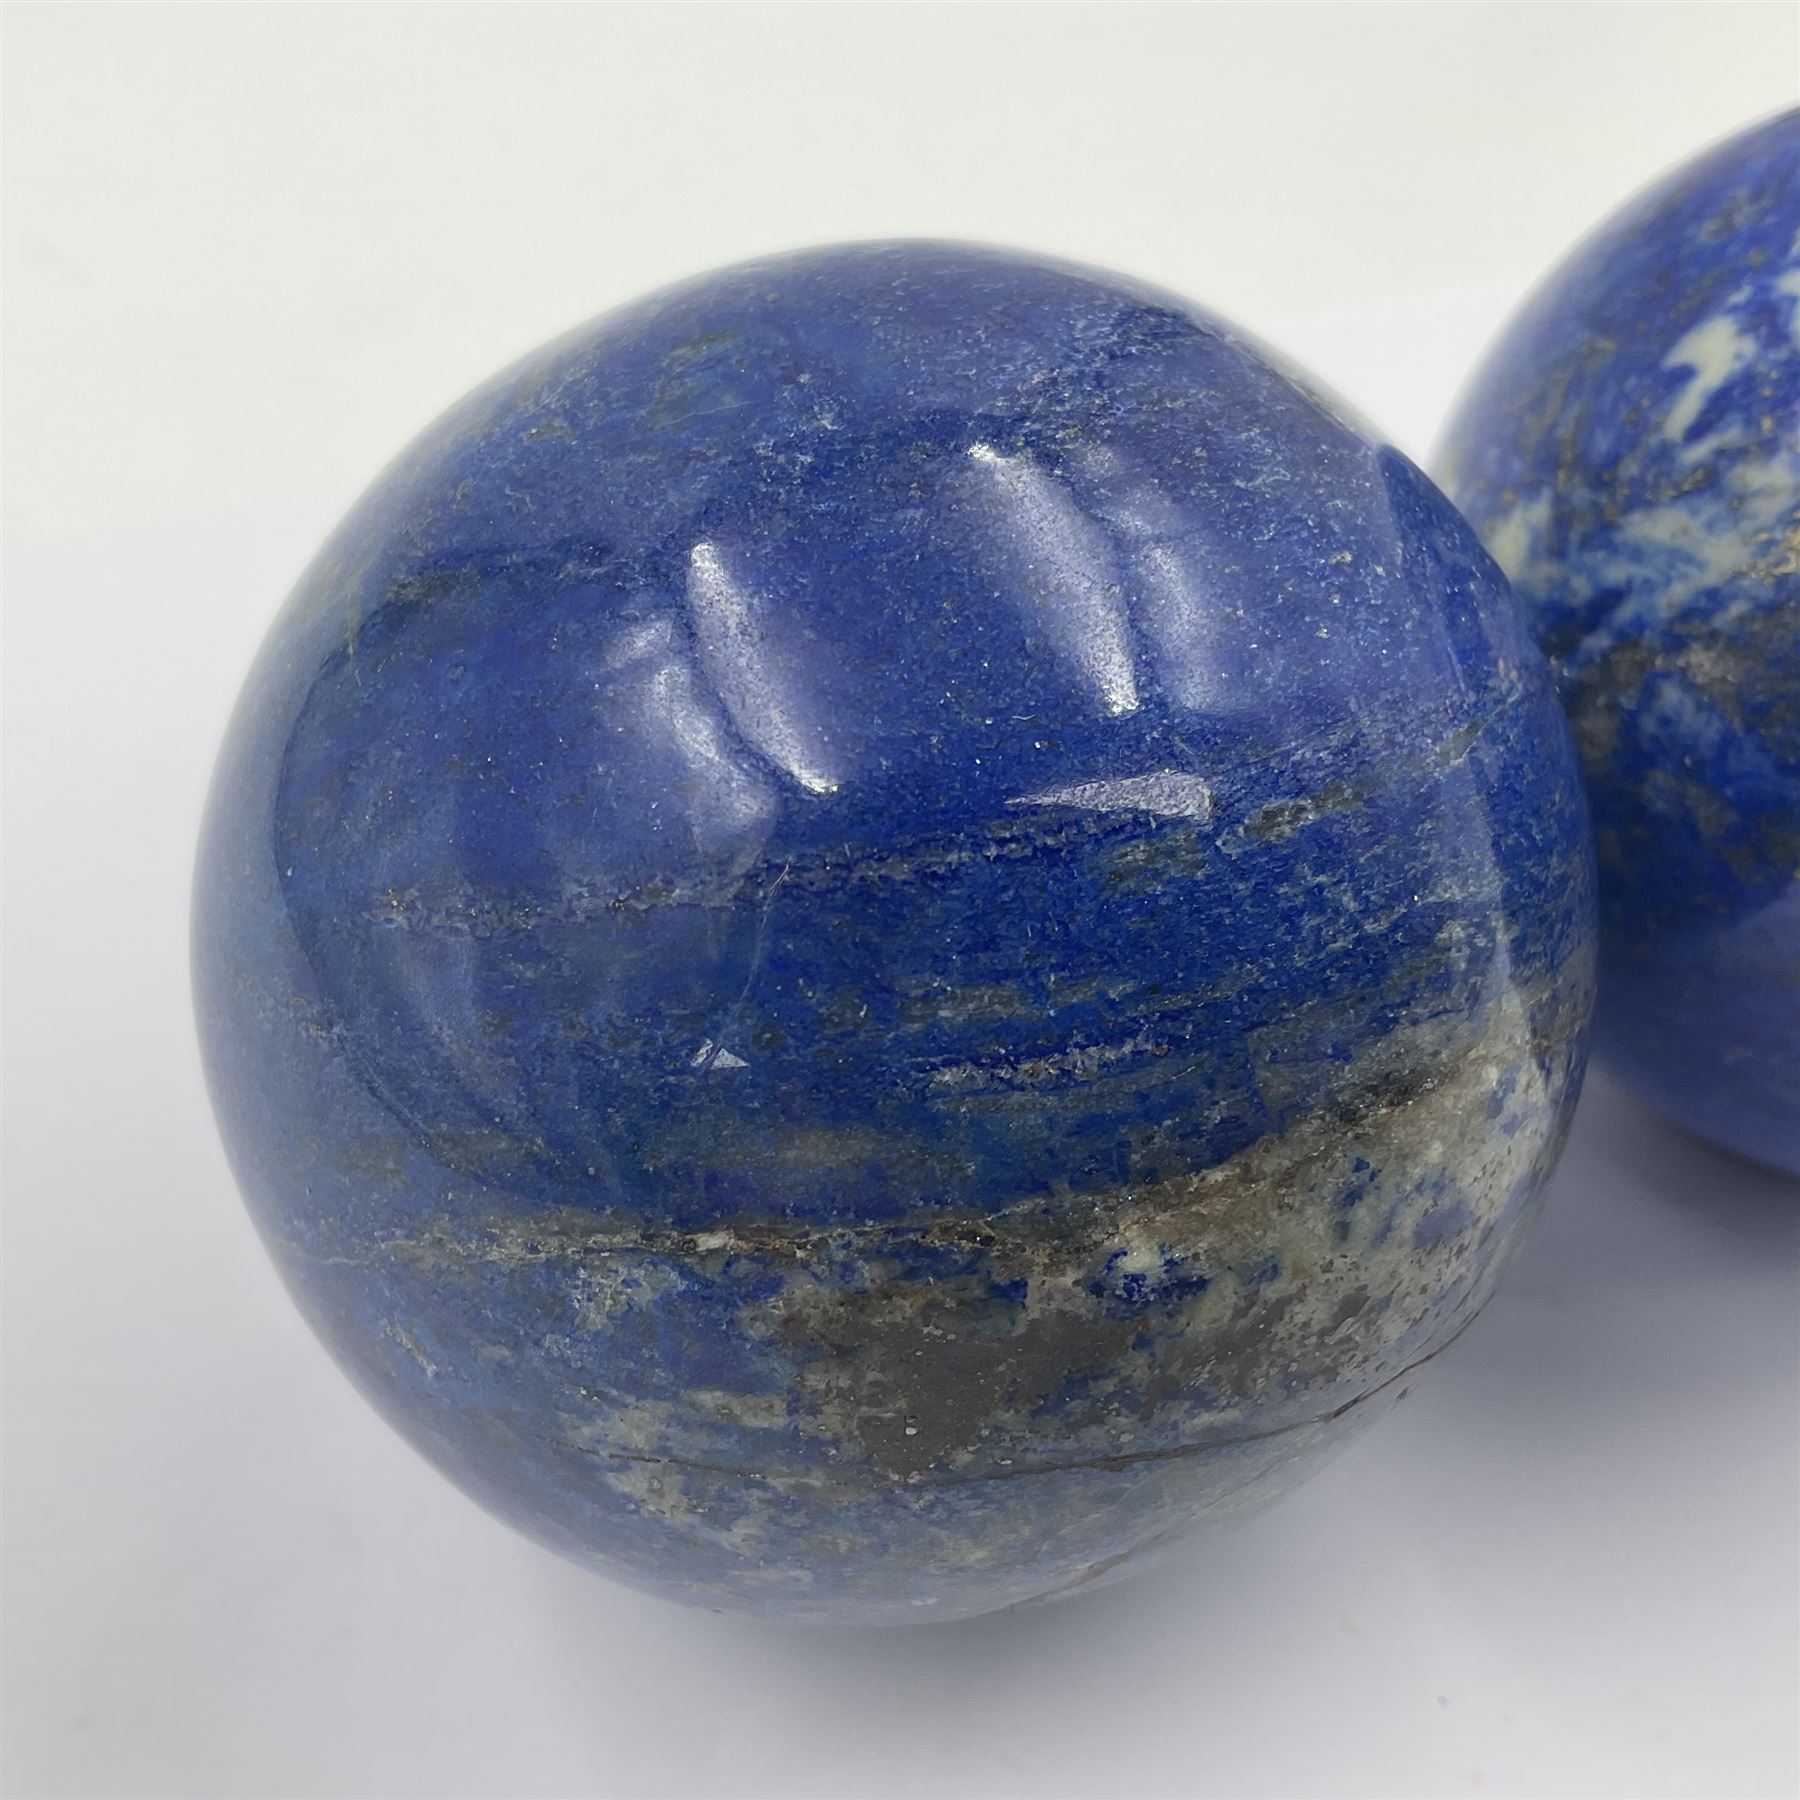 Pair of Lapis lazuli spheres - Image 2 of 8